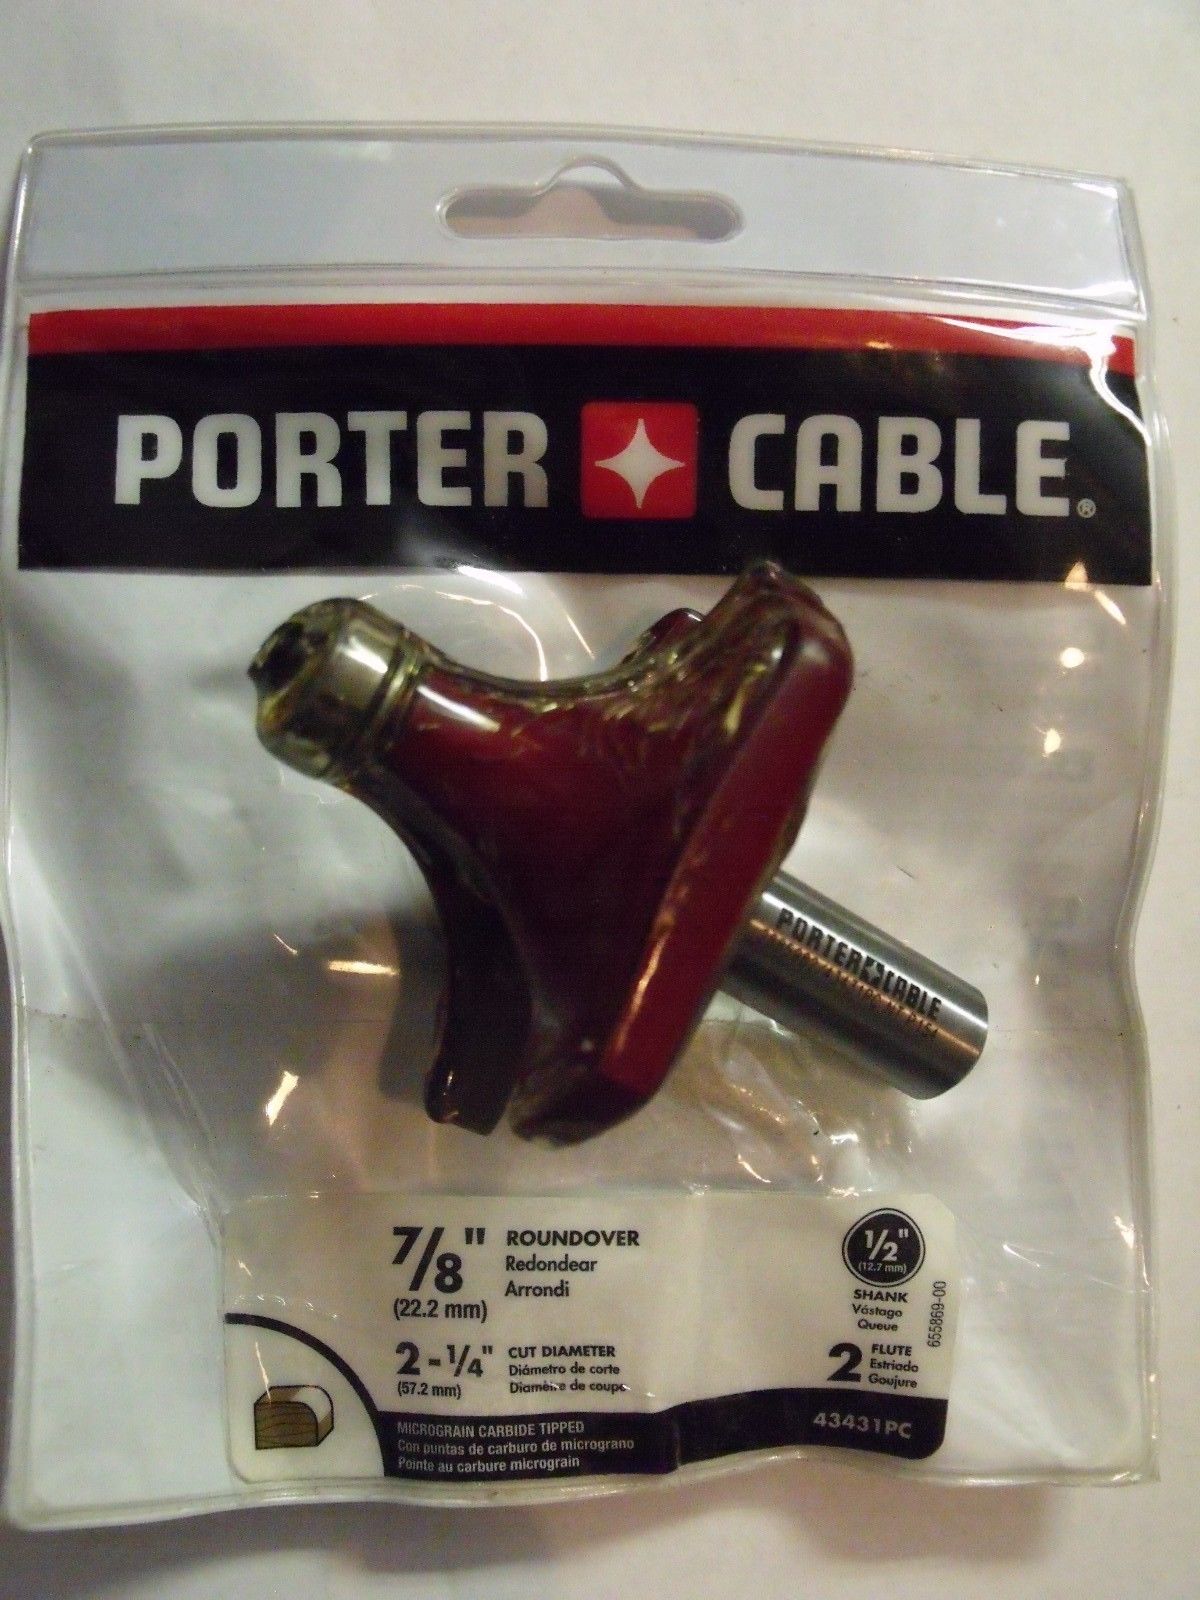 Porter Cable 43431 7/8" Roundover Router Bit  ½" Shank & 1-1/8" Flute Length